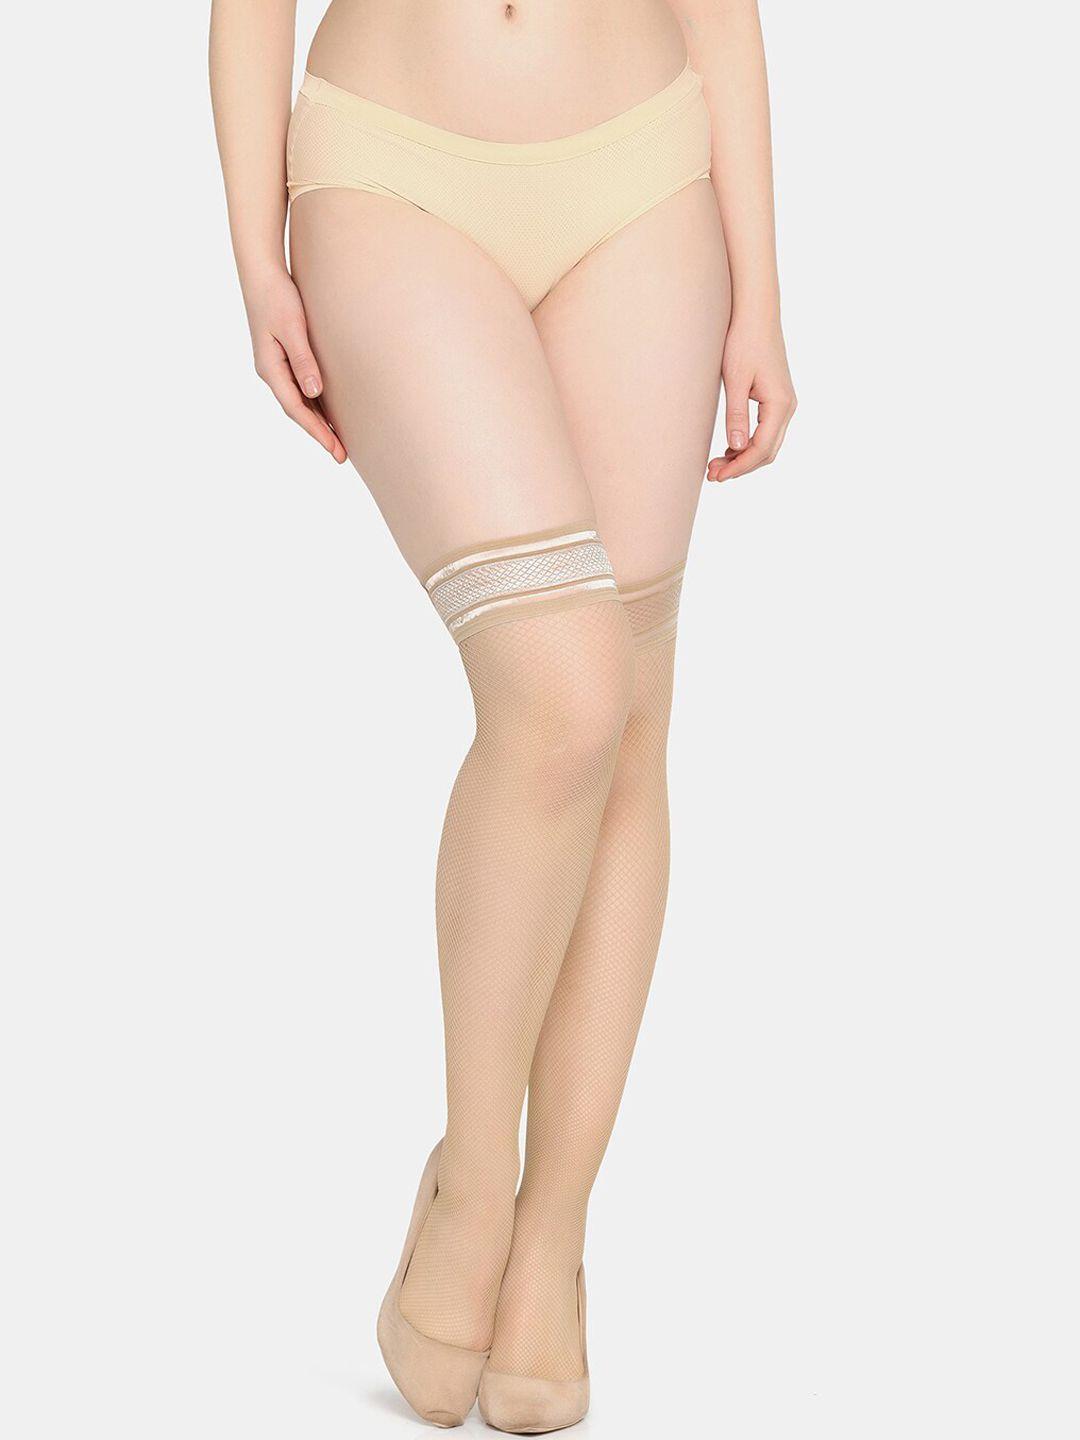 da-intimo-women-mid-rise-semi-sheer-net-stockings